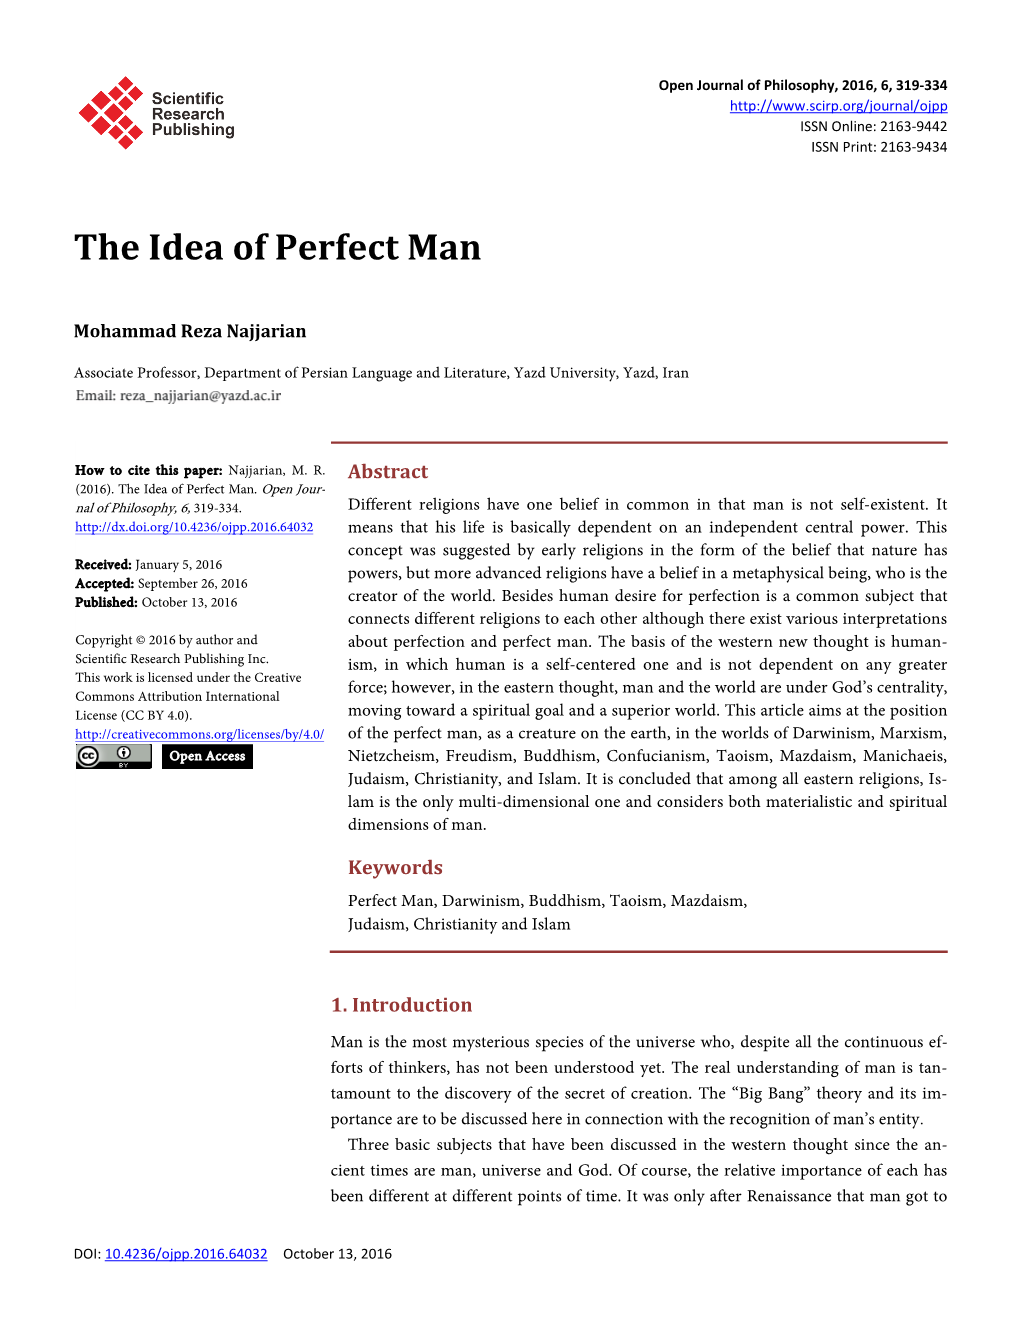 The Idea of Perfect Man